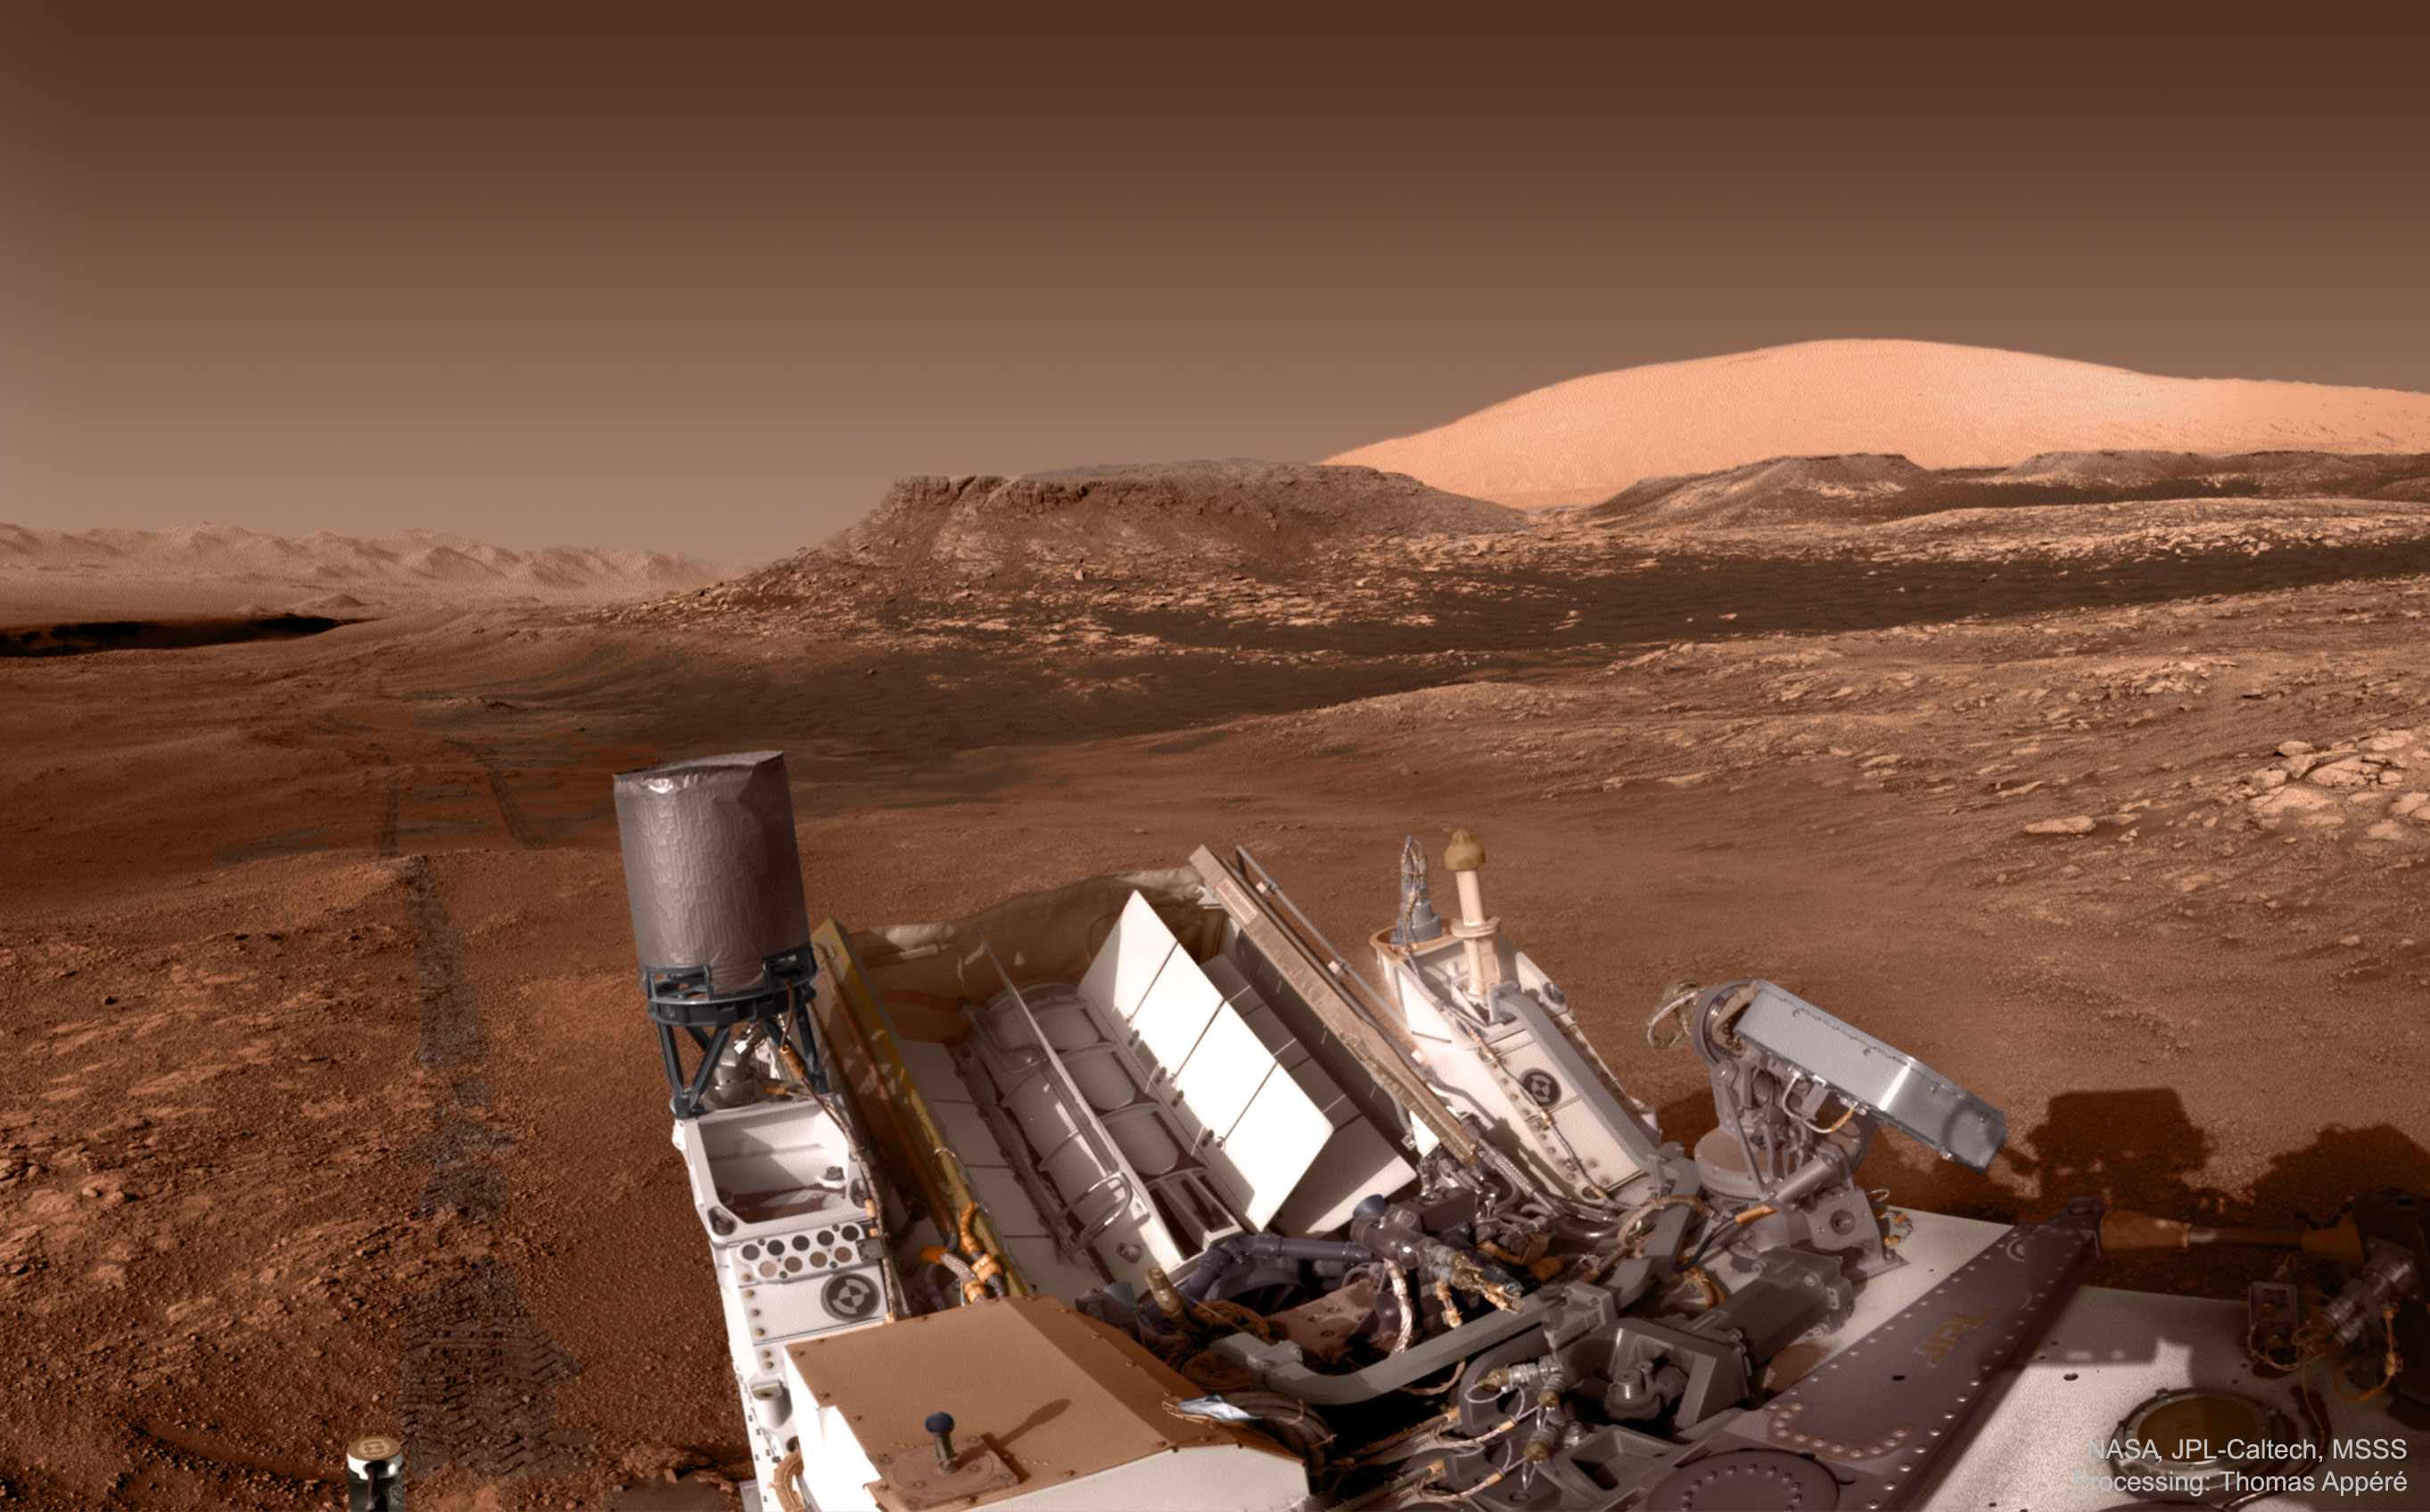 фото марсианского пейзажа